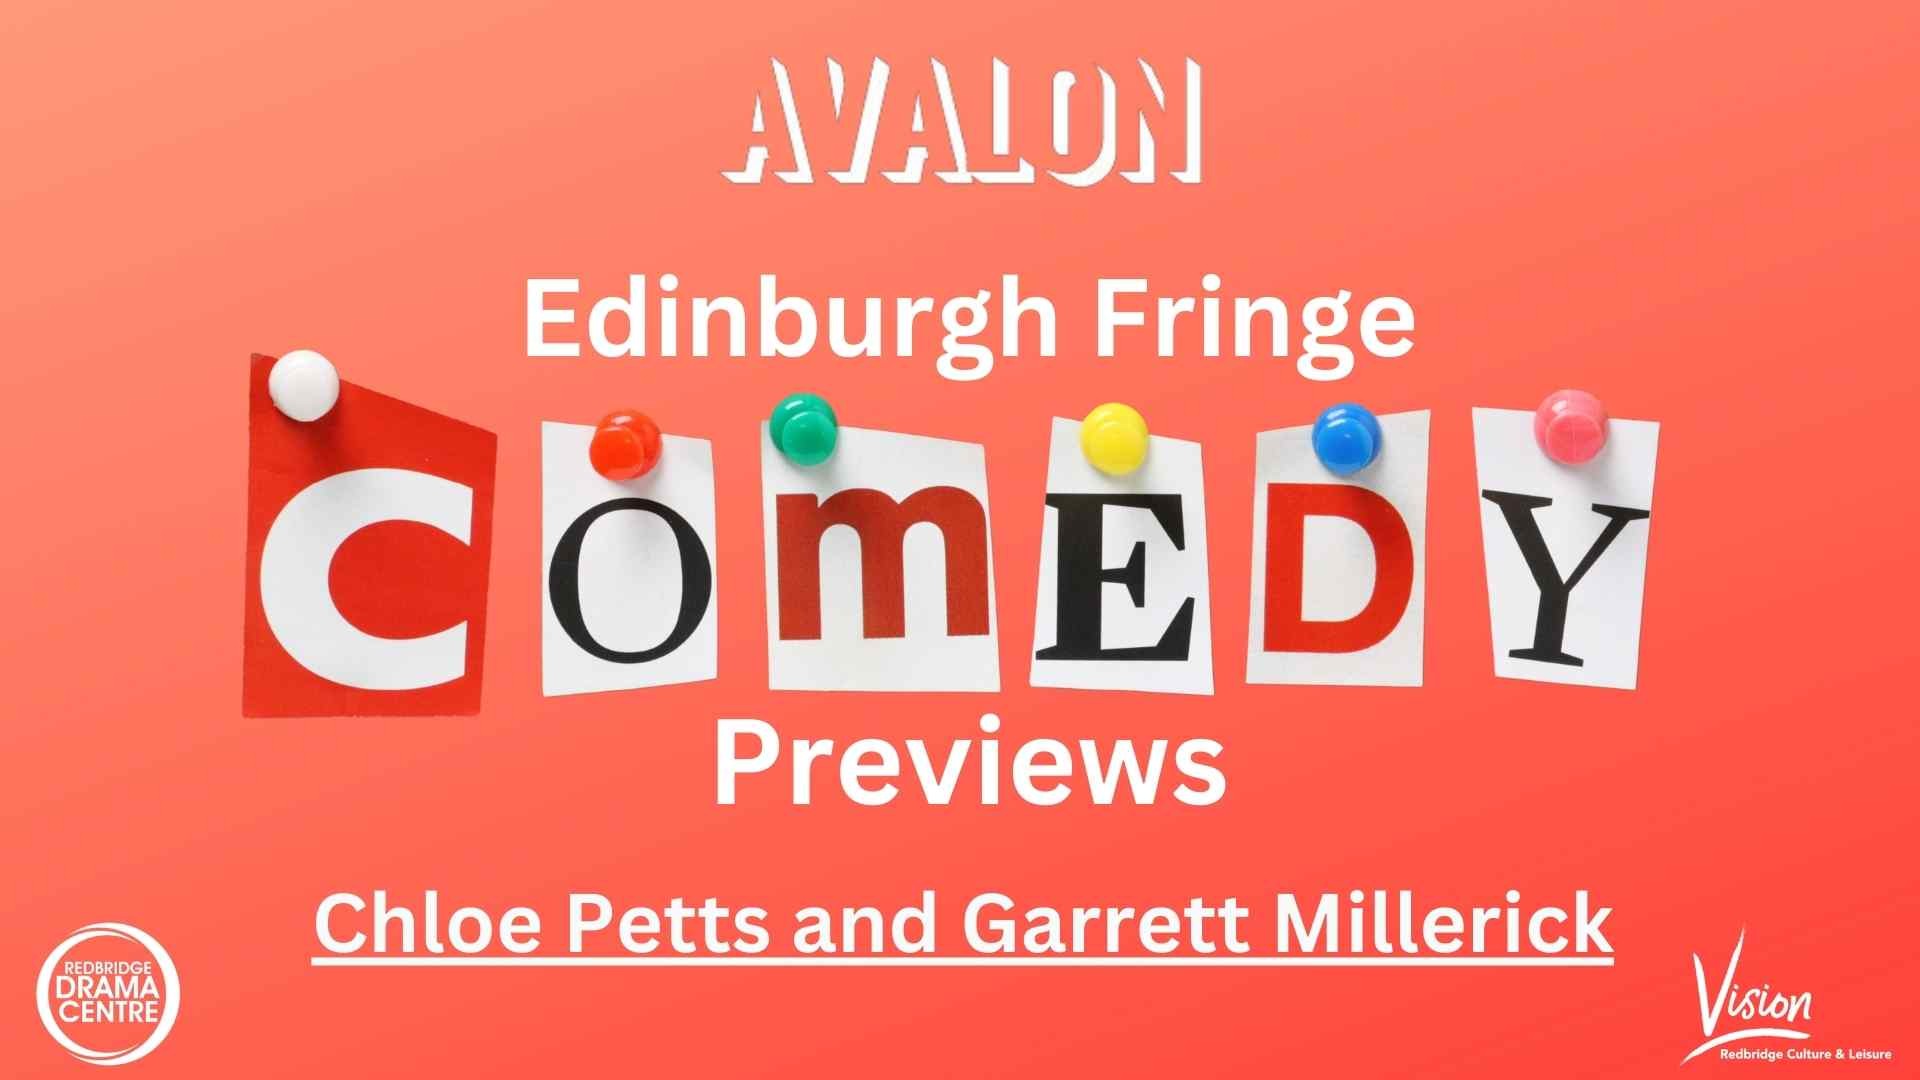 Edinburgh Fringe Comedy Preview - Chloe Petts and Garret Millerick